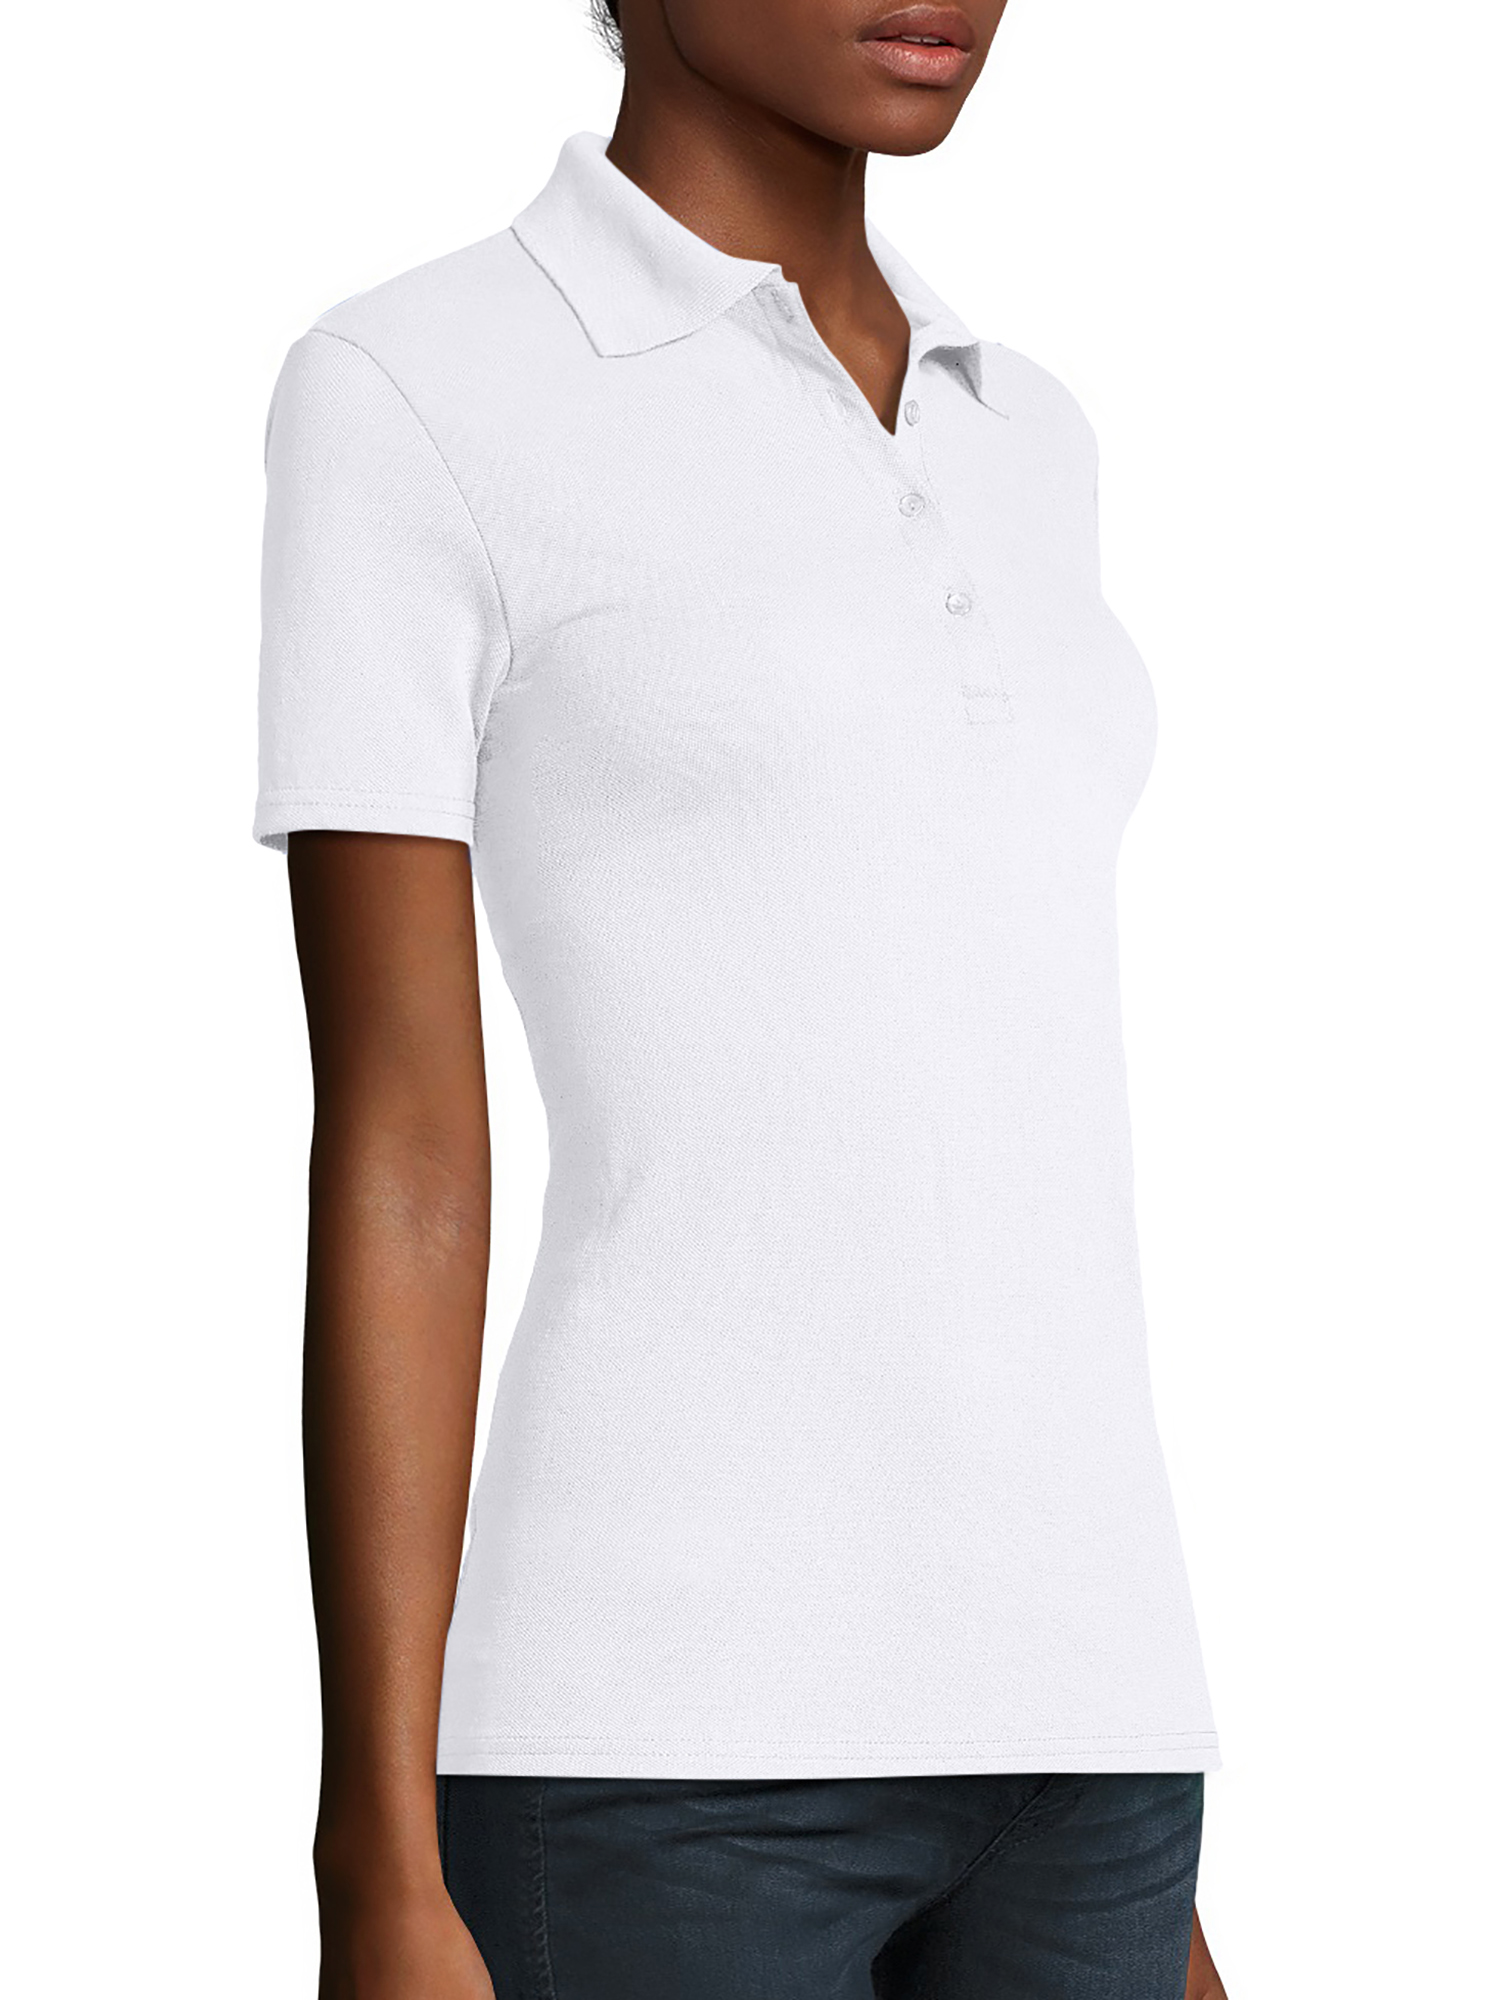 Hanes Women's X-Temp w/ Fresh IQ Short Sleeve Pique Polo Shirt - image 3 of 6